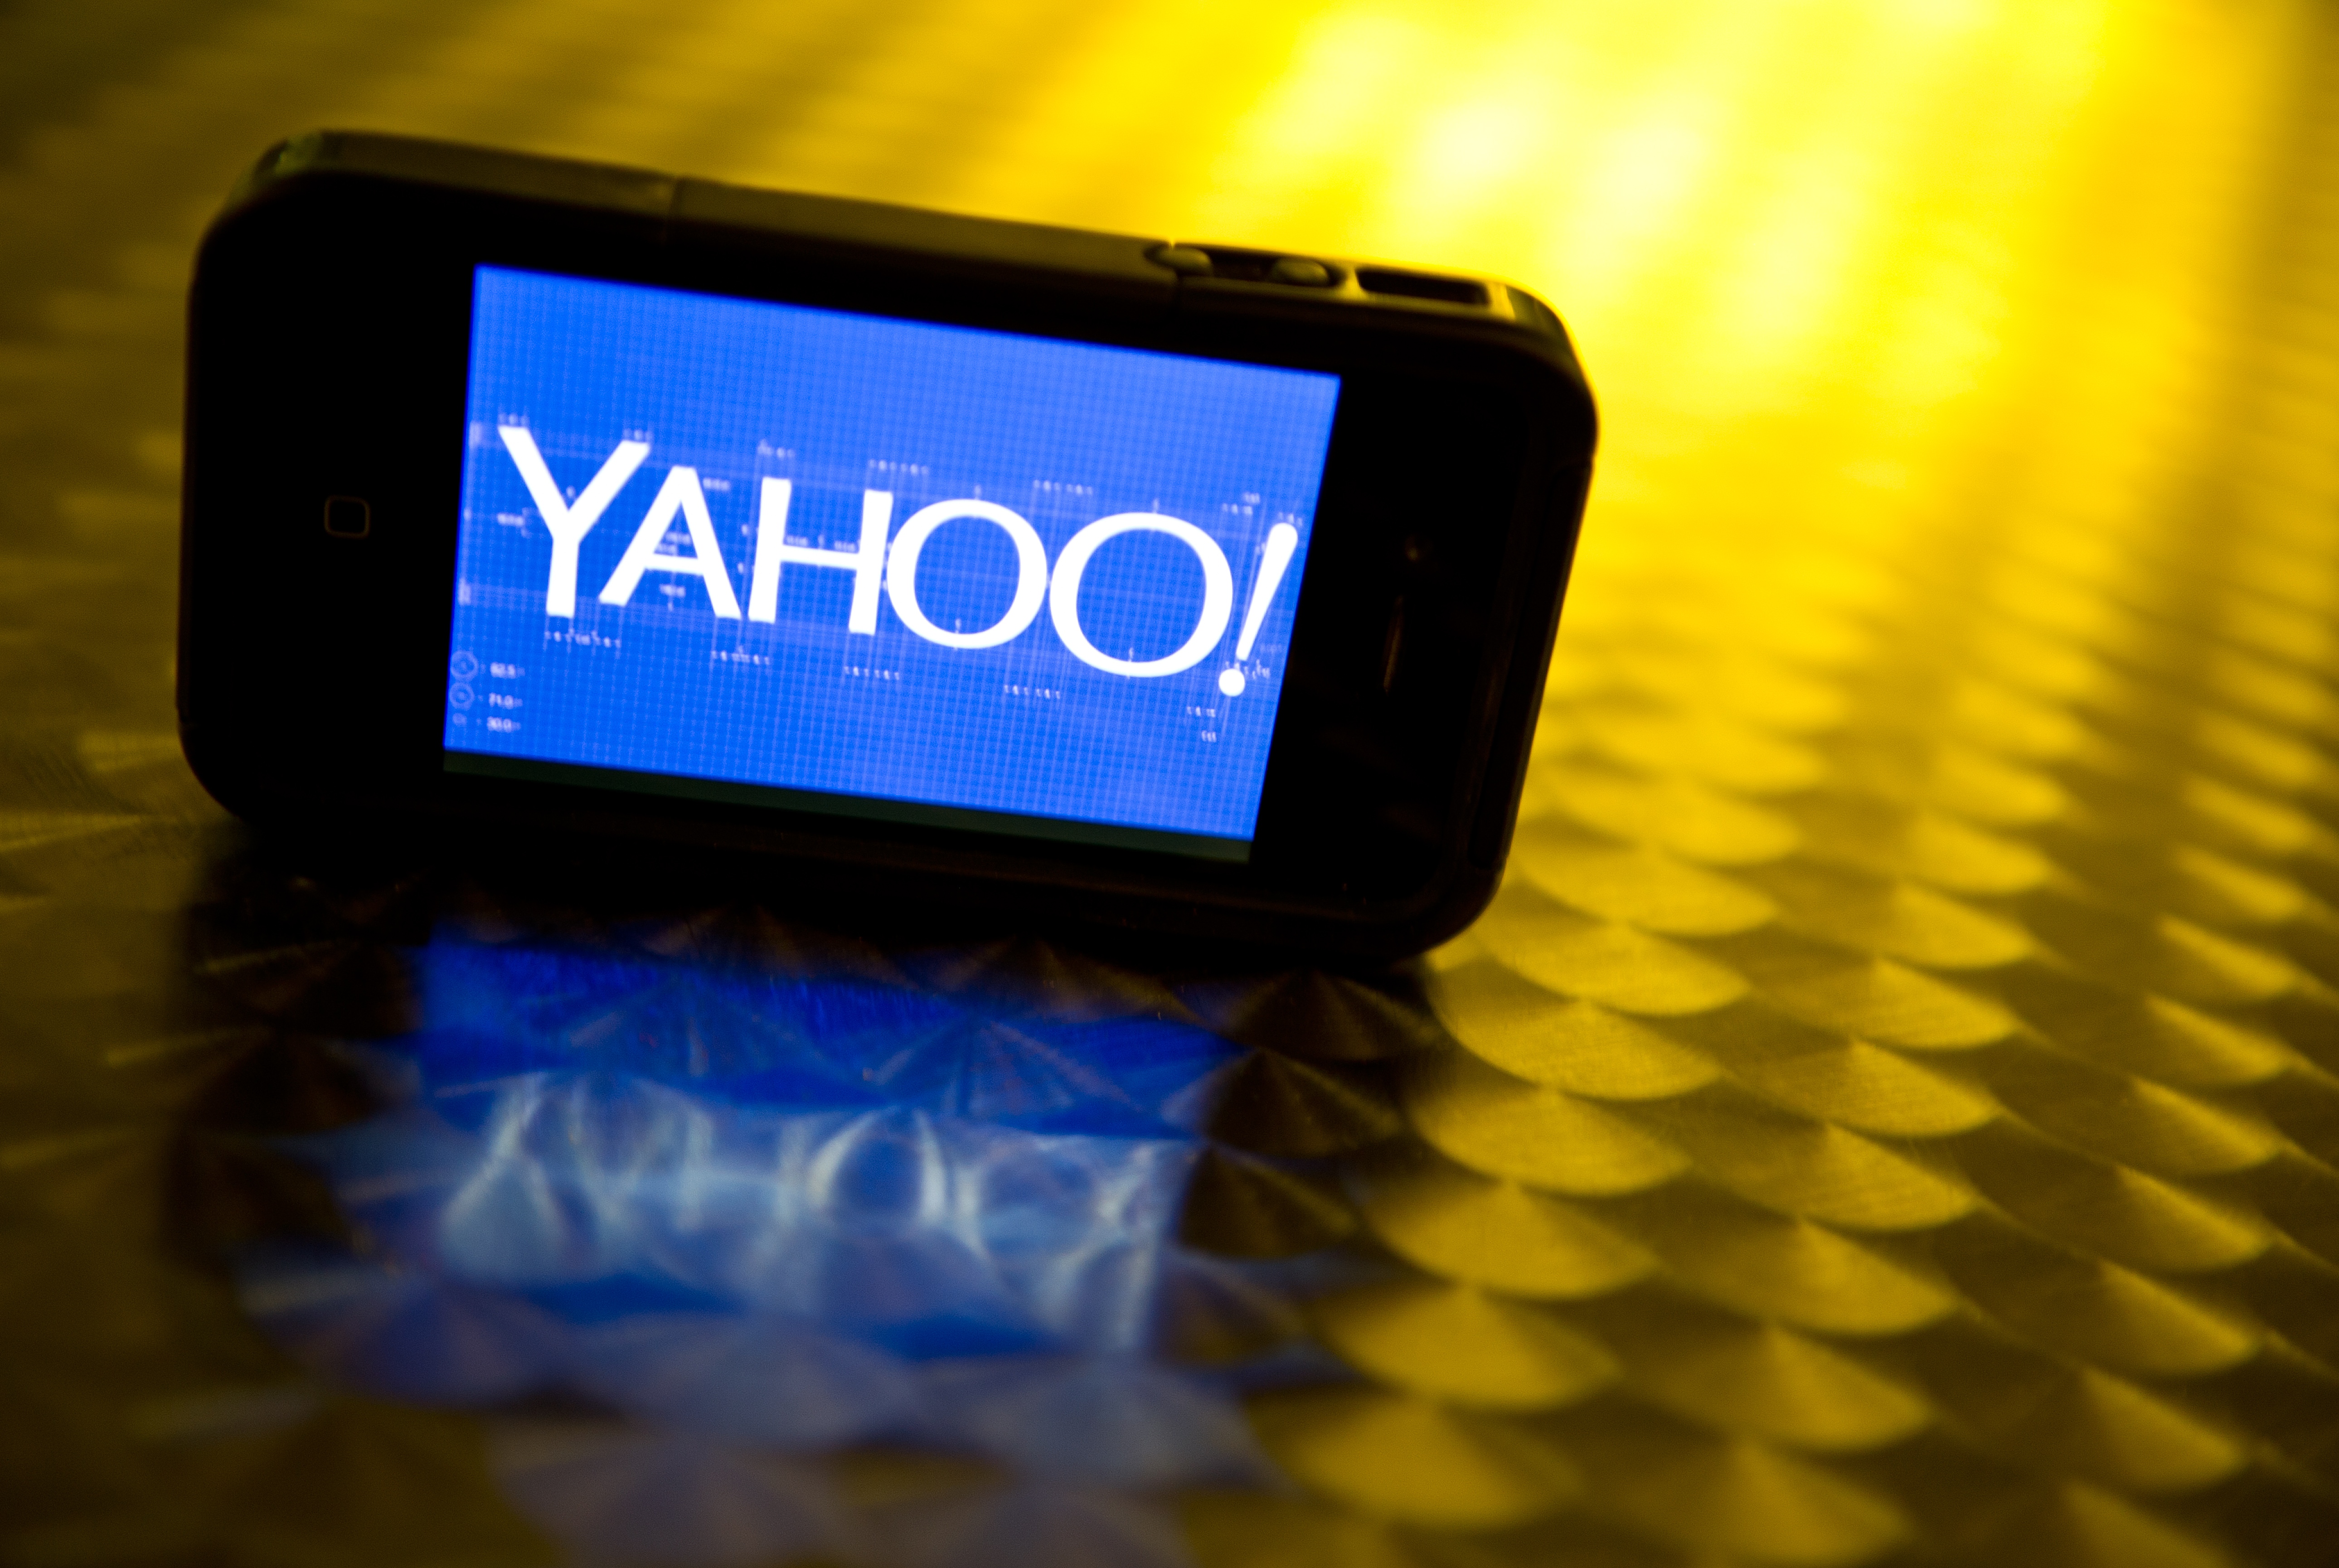 The Yahoo logo on a smartphone